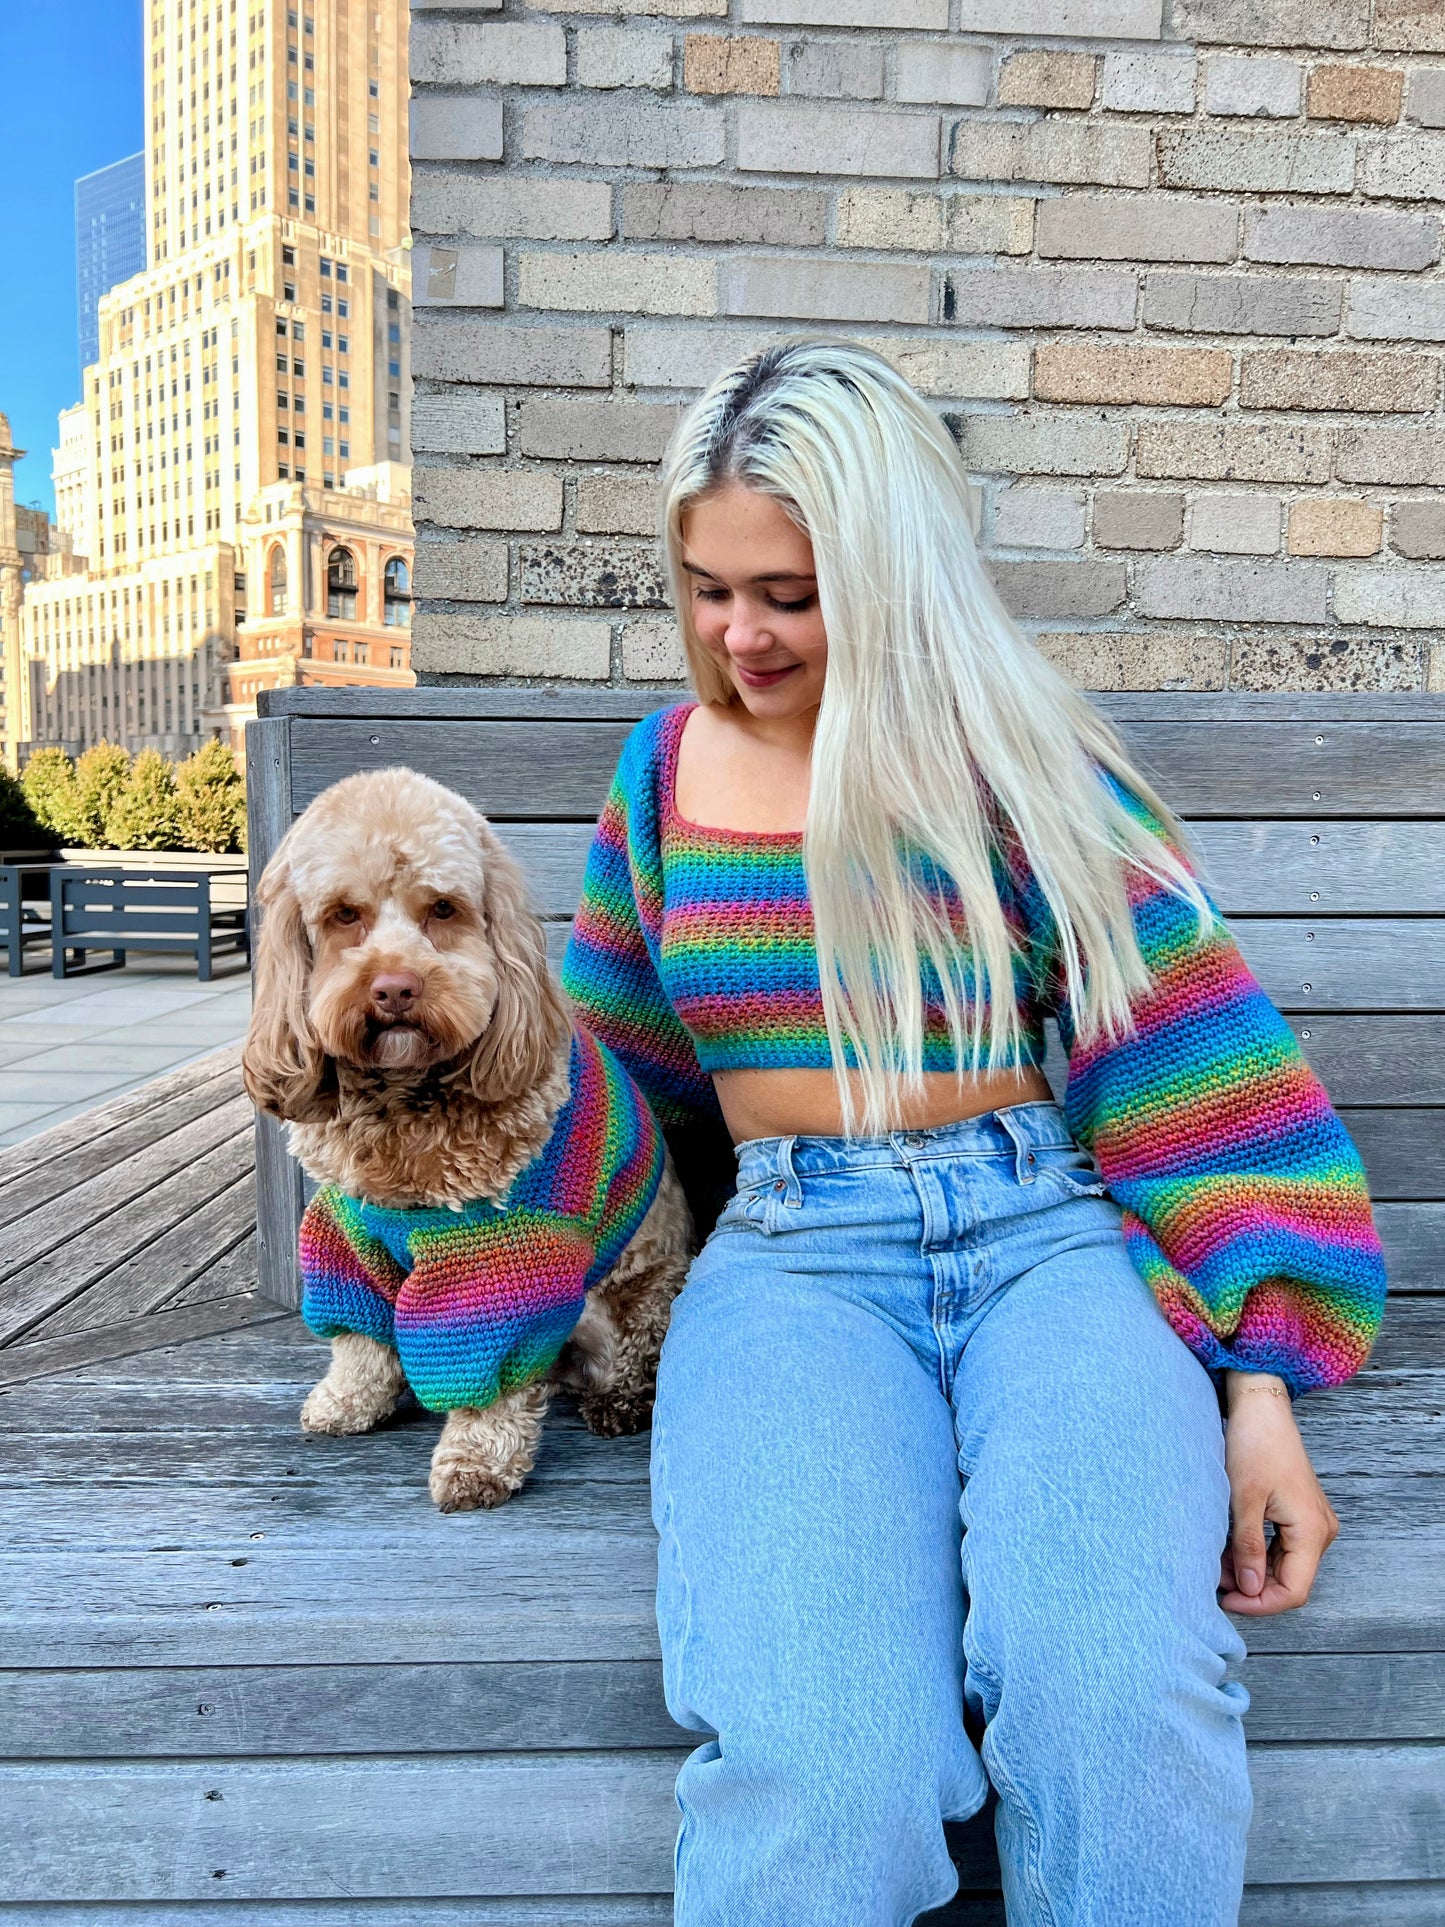 Kauai Top (Dog Sweater) Crochet Pattern